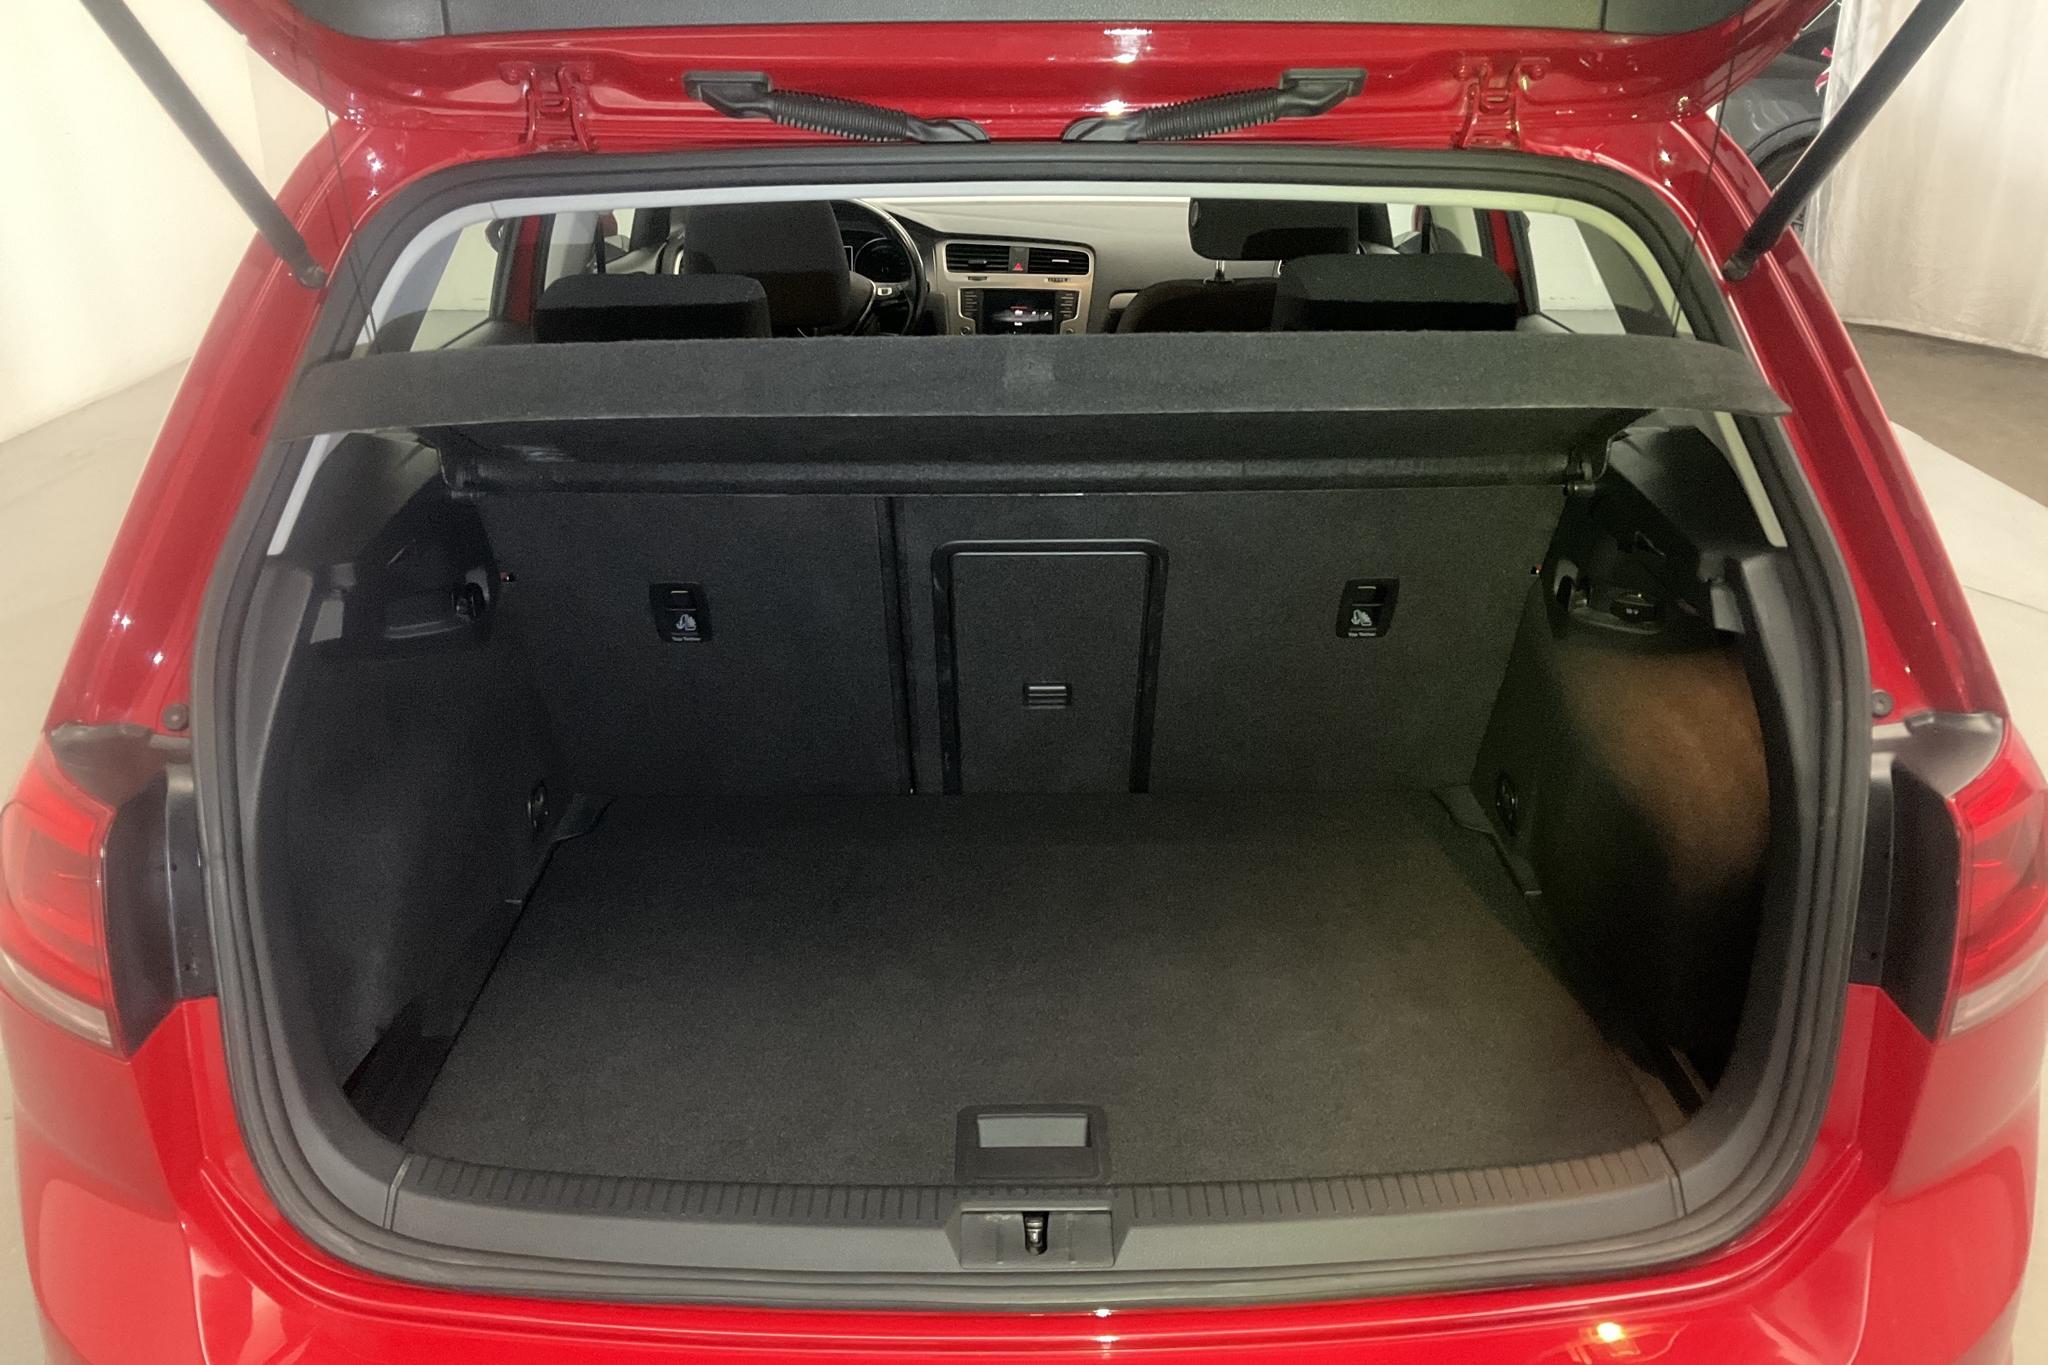 VW Golf VII 1.6 TDI BlueMotion 5dr 4Motion (110hk) - 154 330 km - Manual - red - 2016